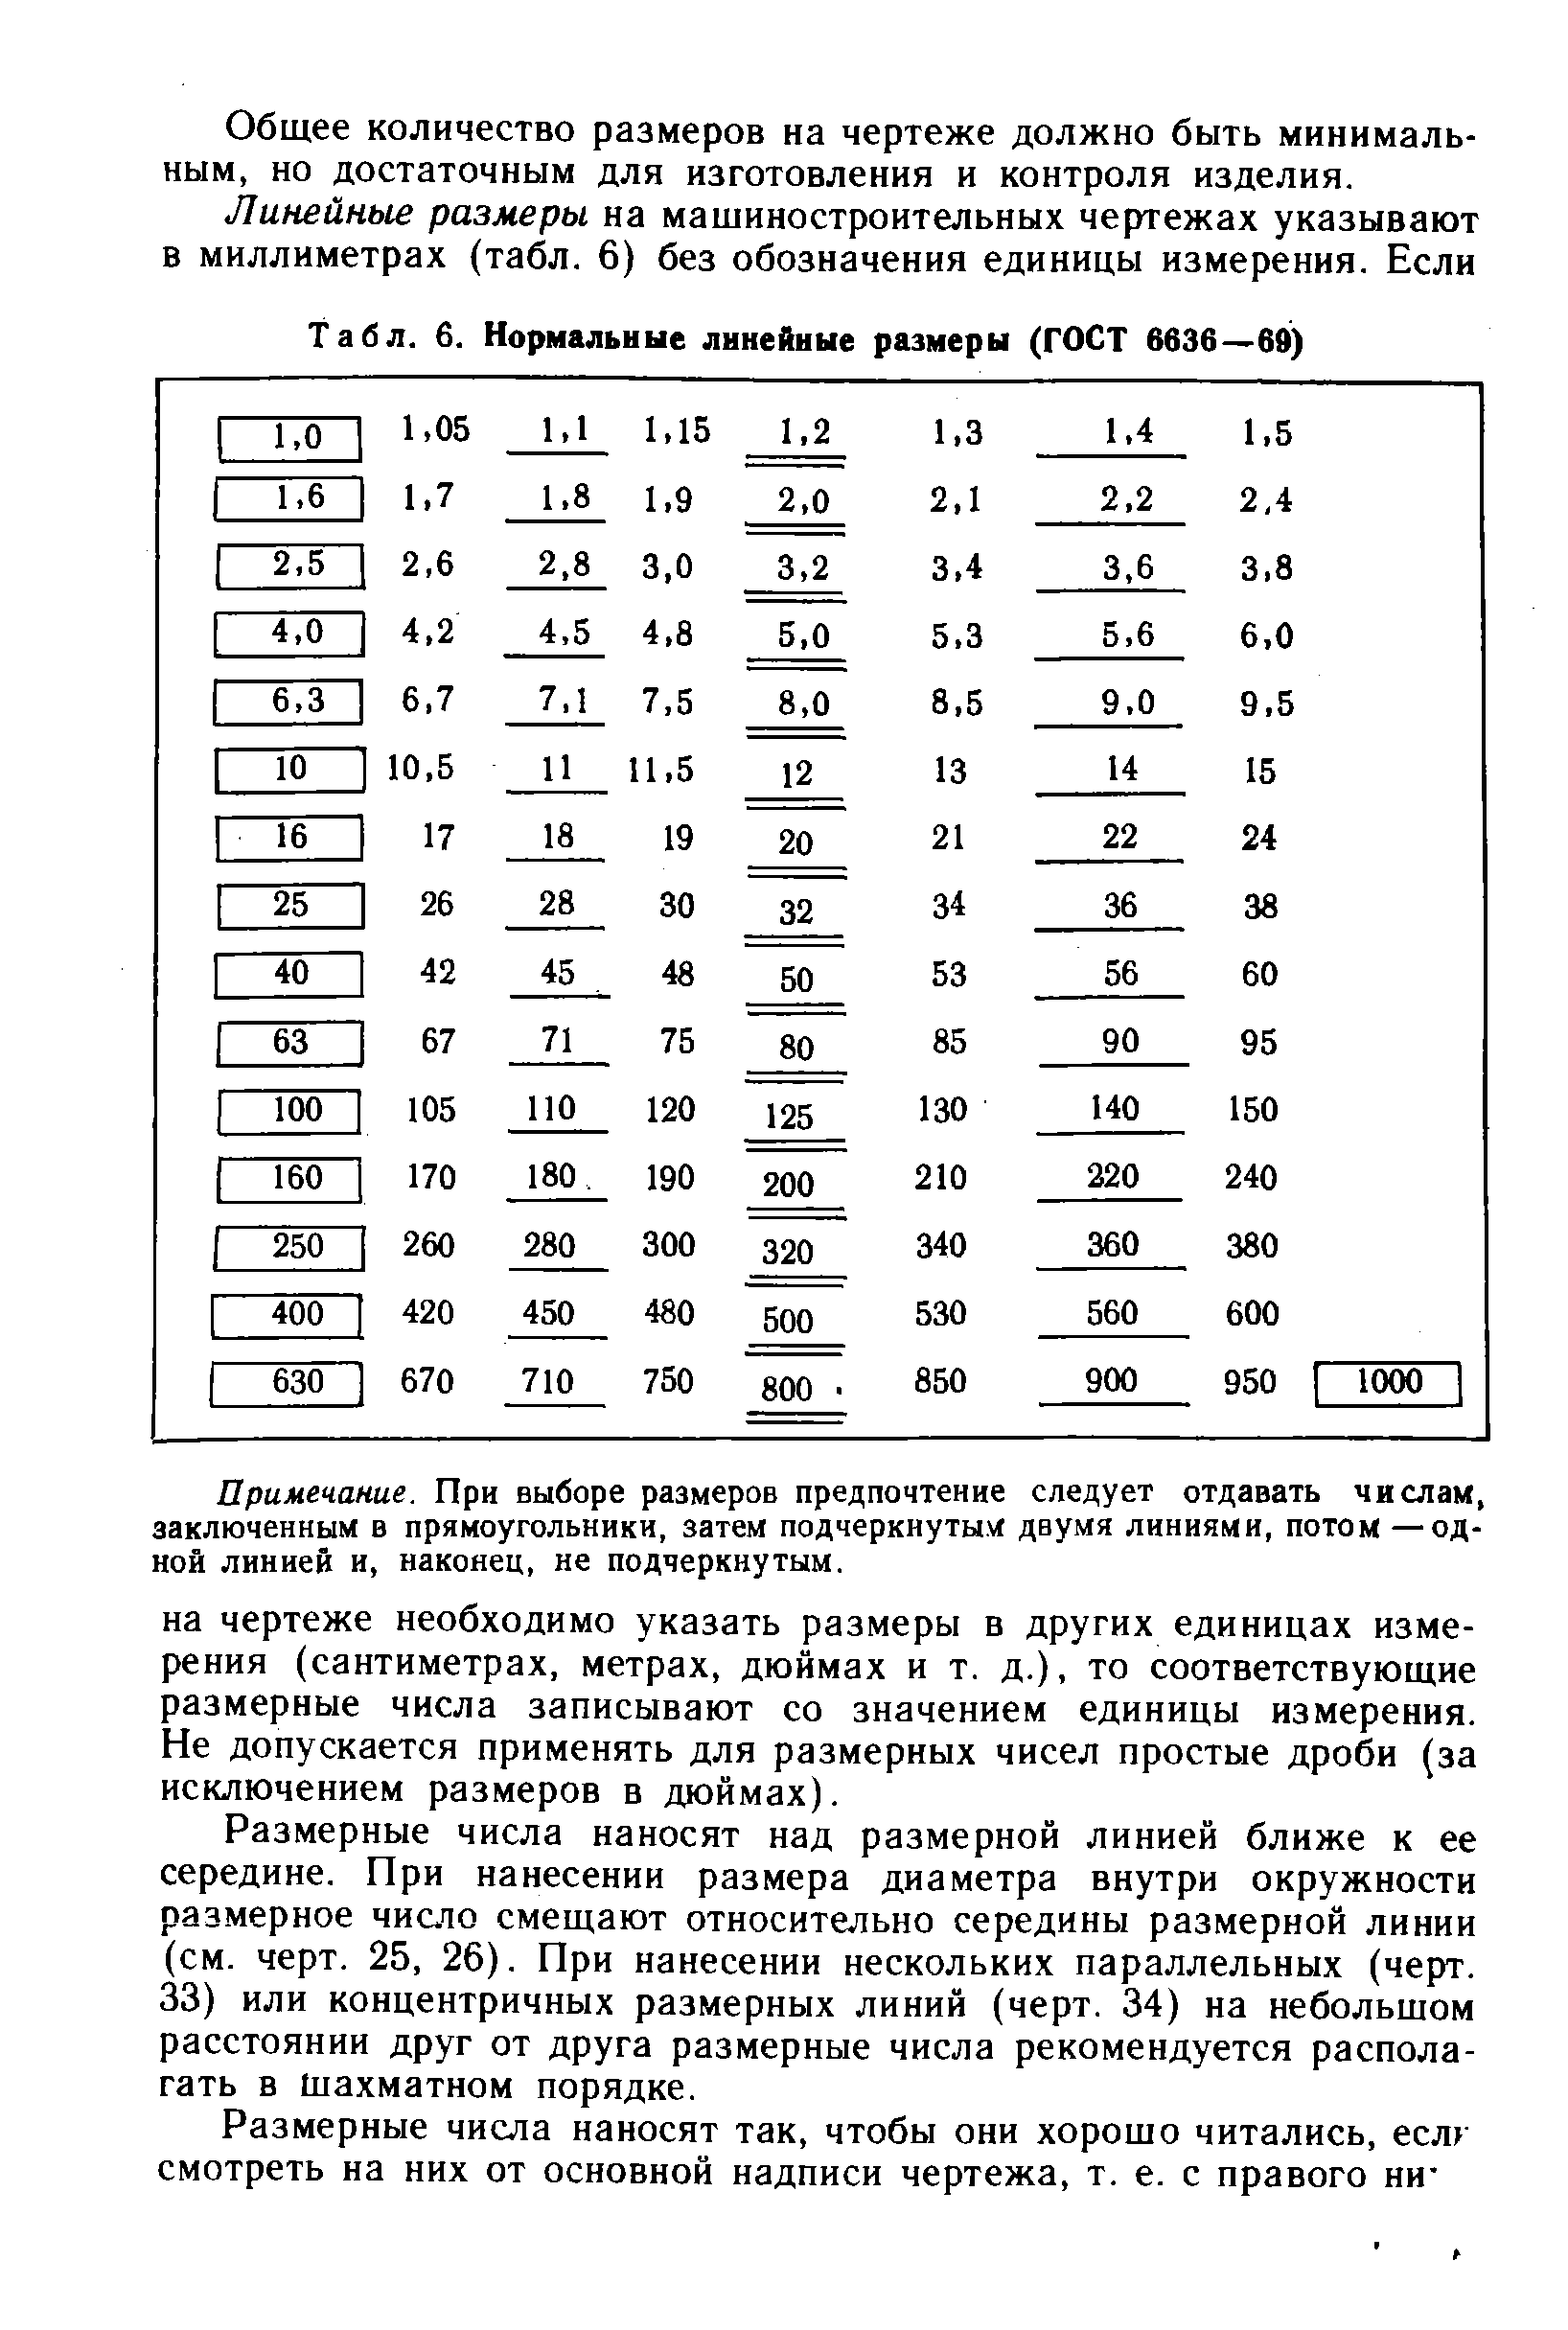 Табл. 6. Нормальные линейные размеры (ГОСТ 6636—69)
